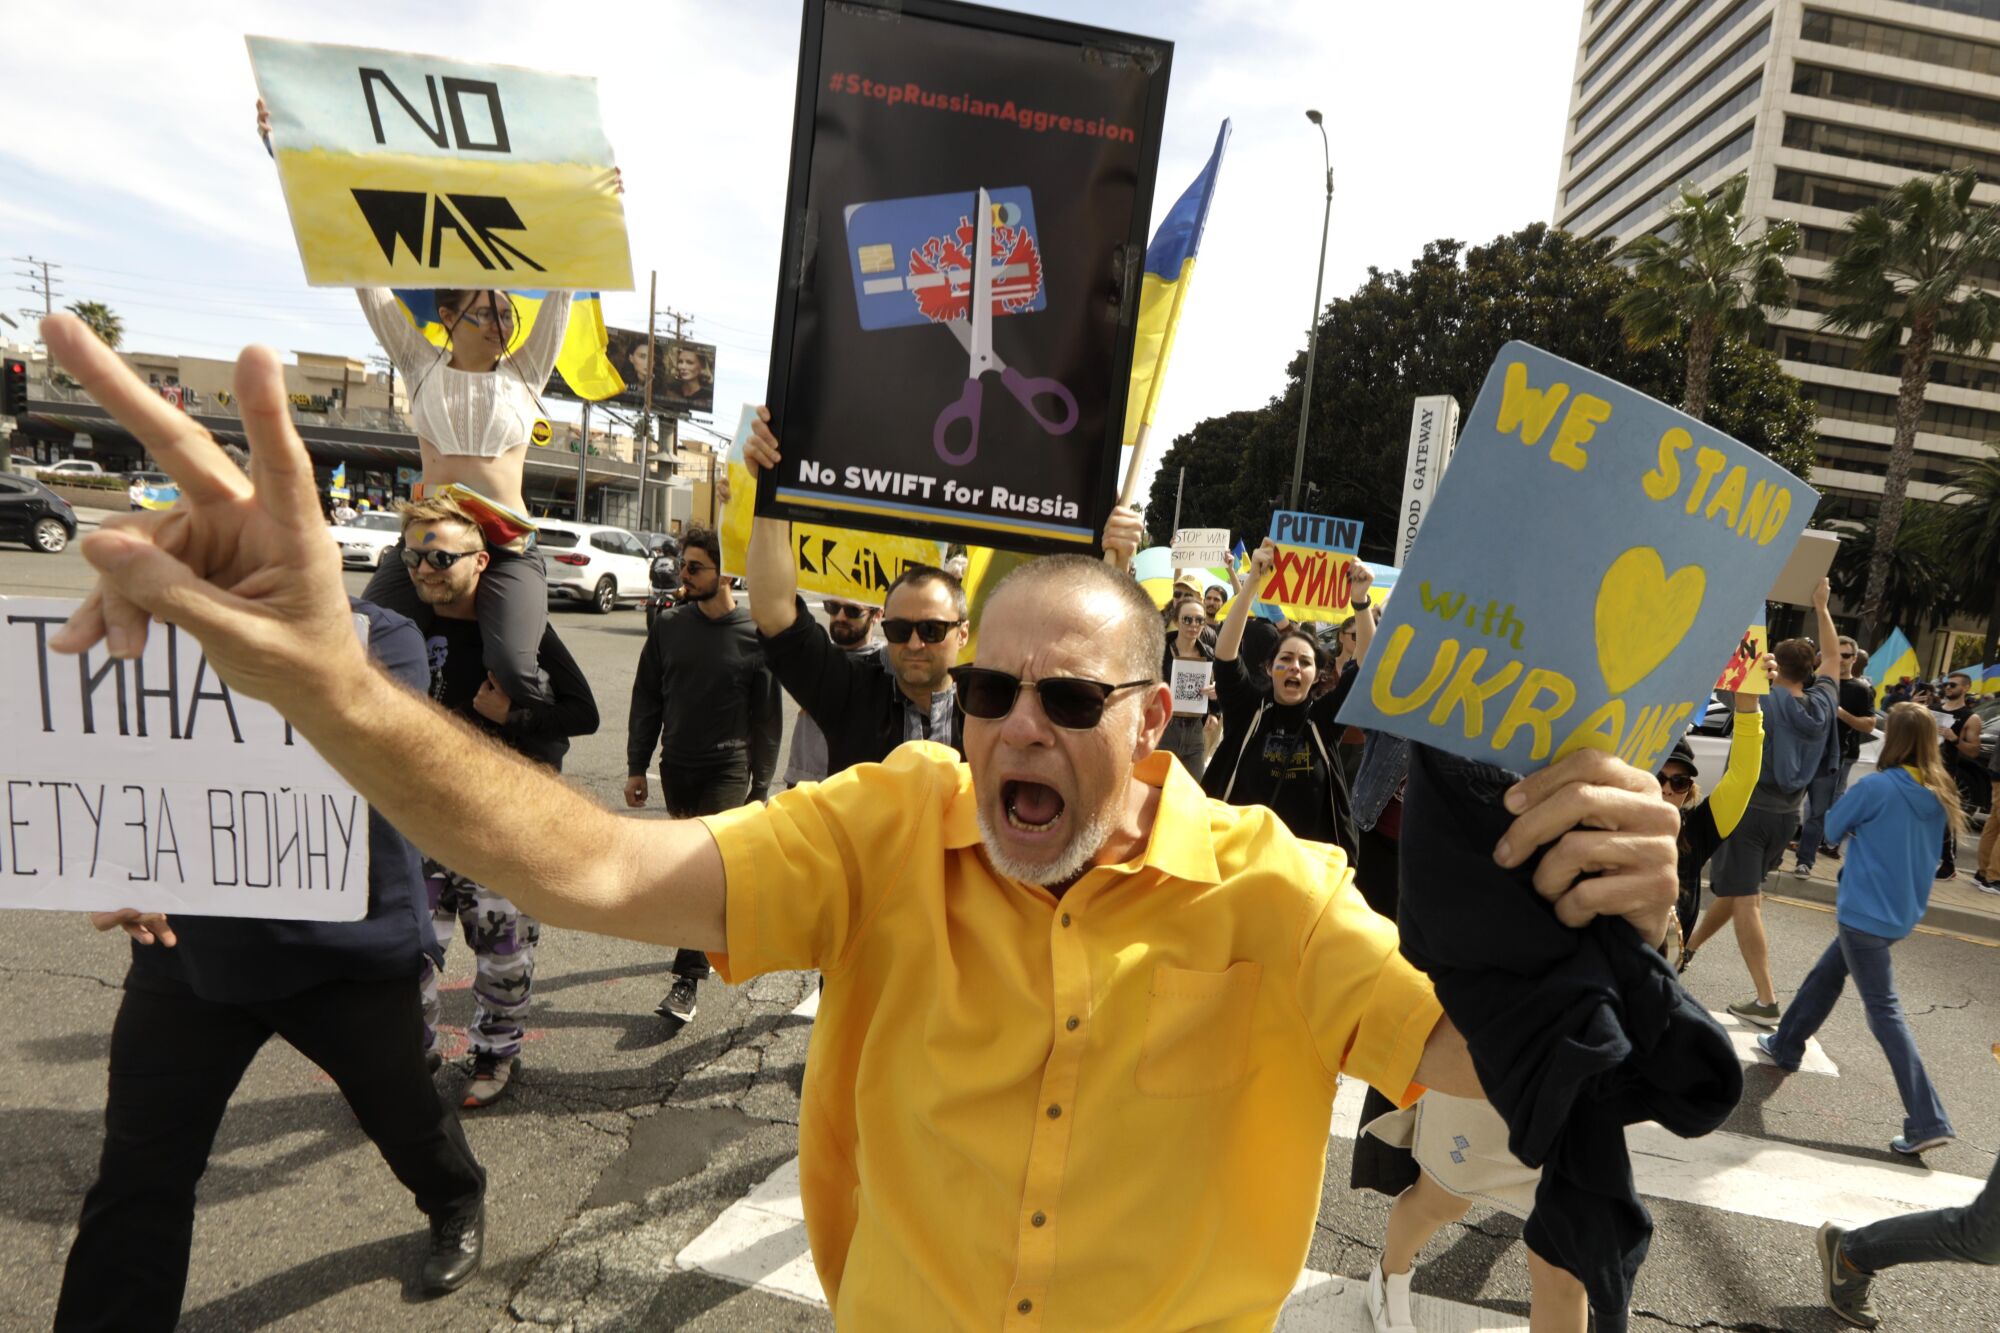 Ukrainian Americans and supporters of Ukraine rally